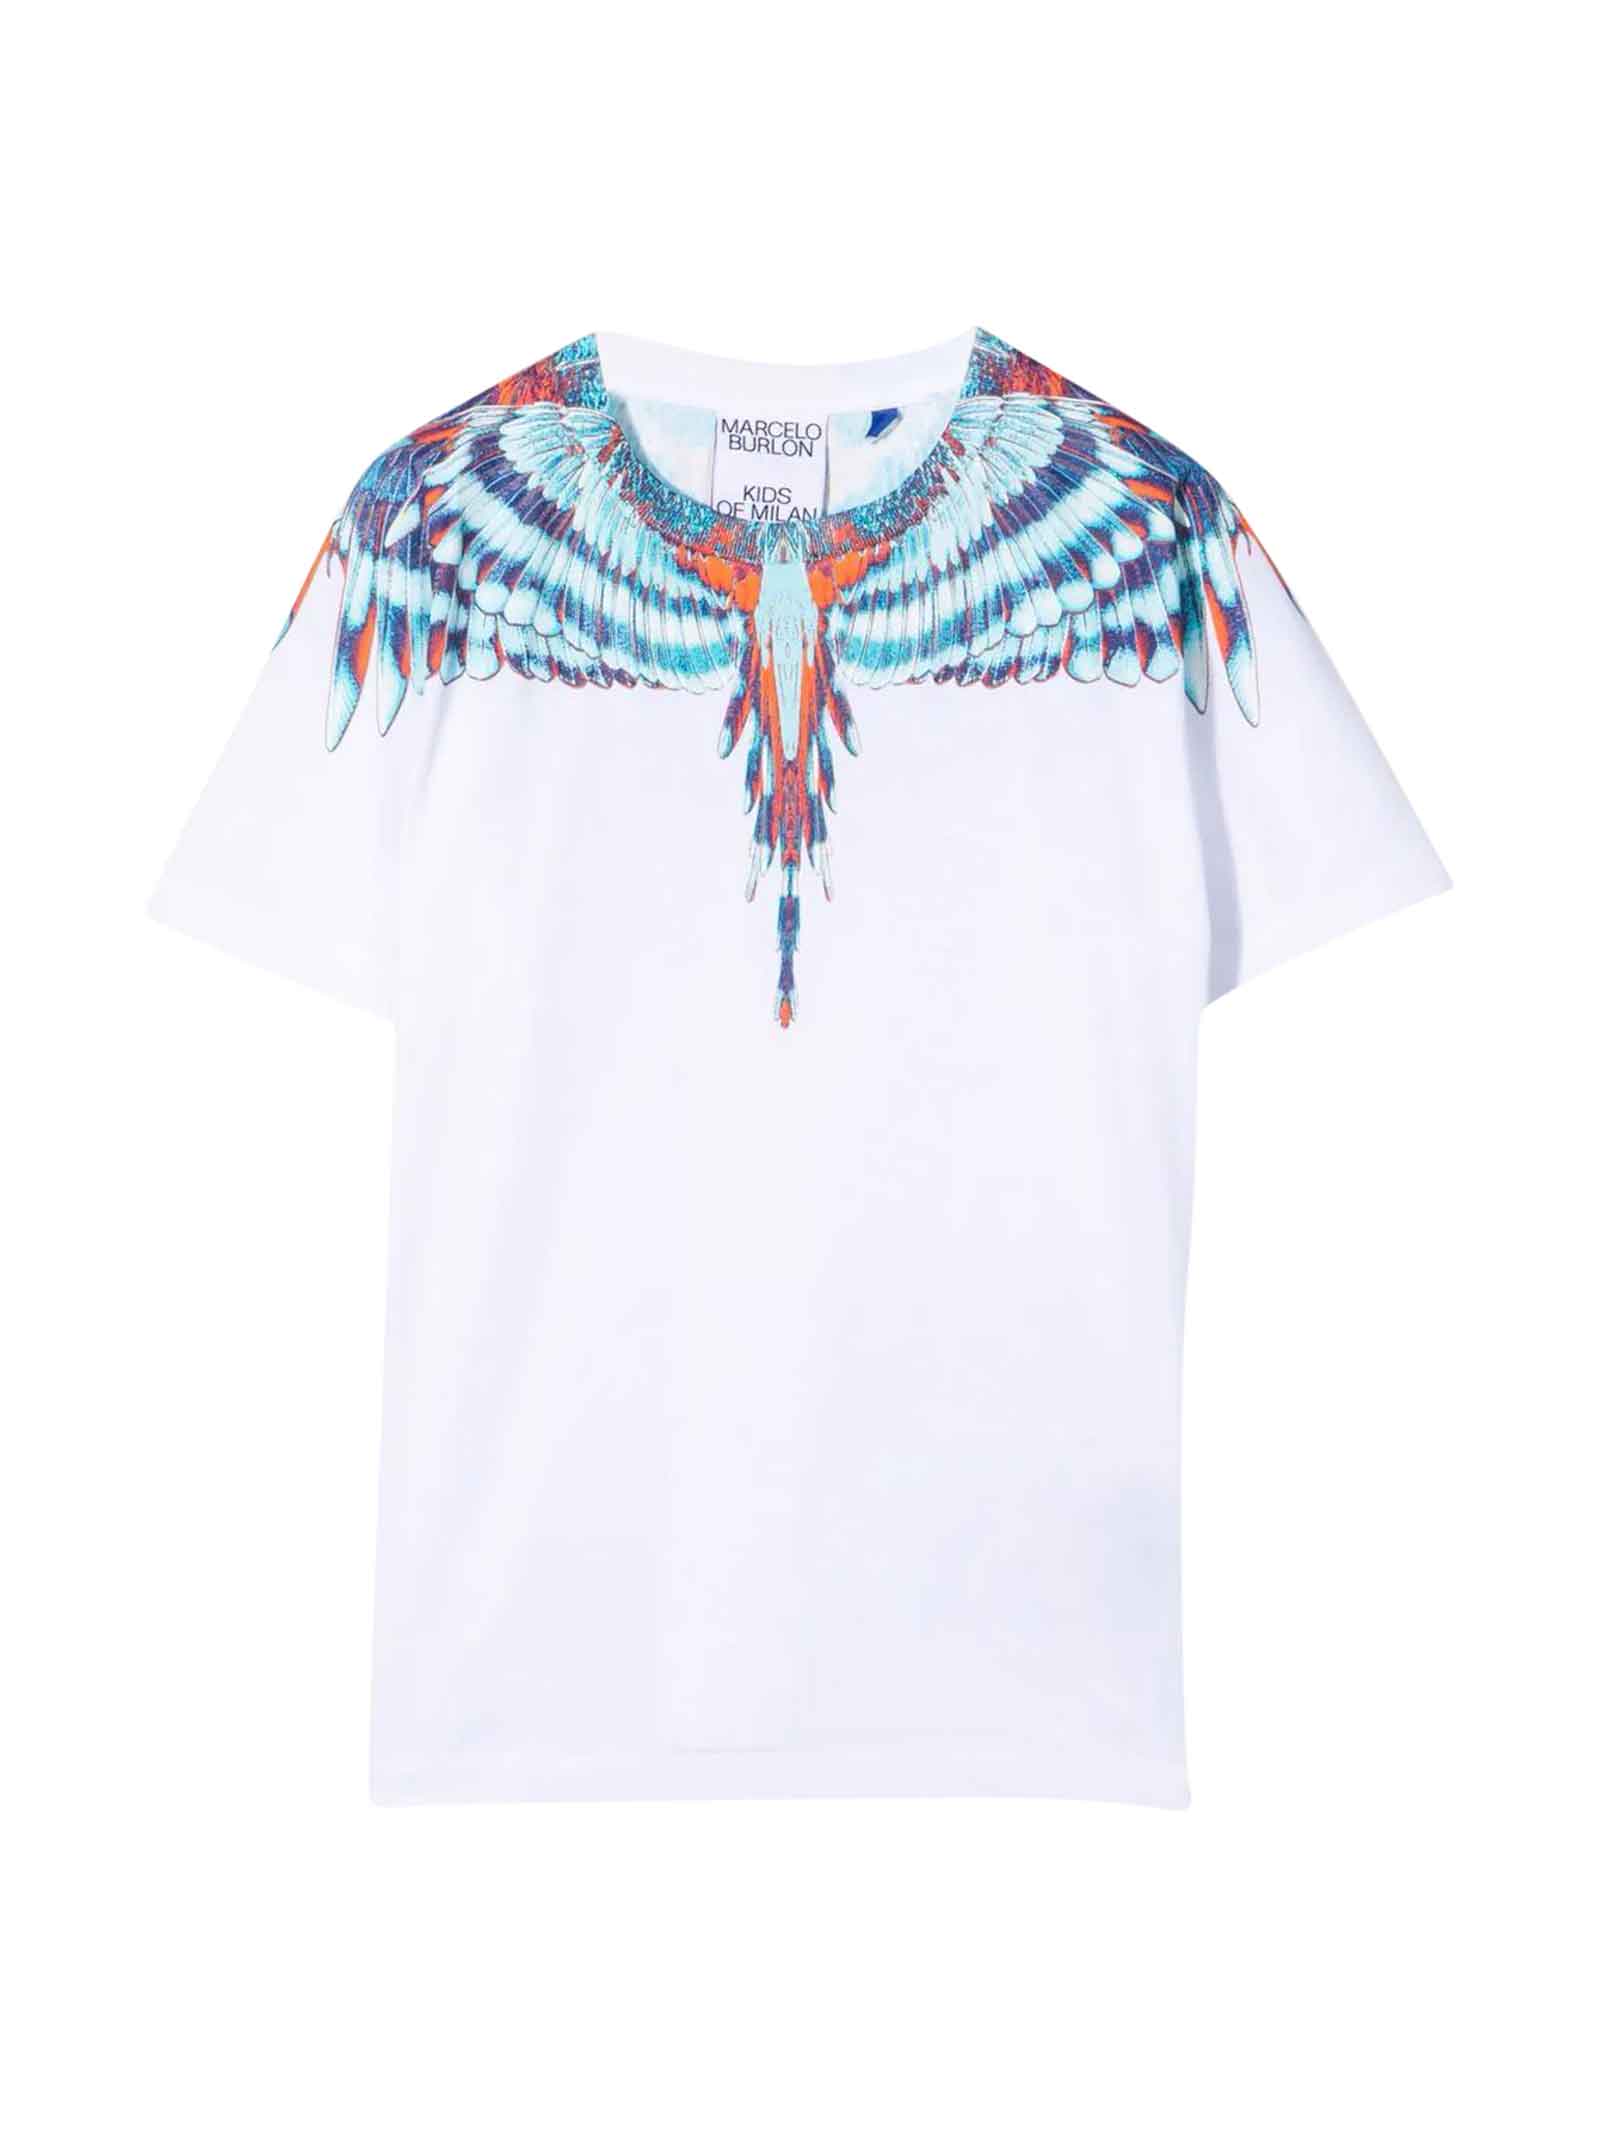 Marcelo Burlon White T-shirt With Multicolor Print